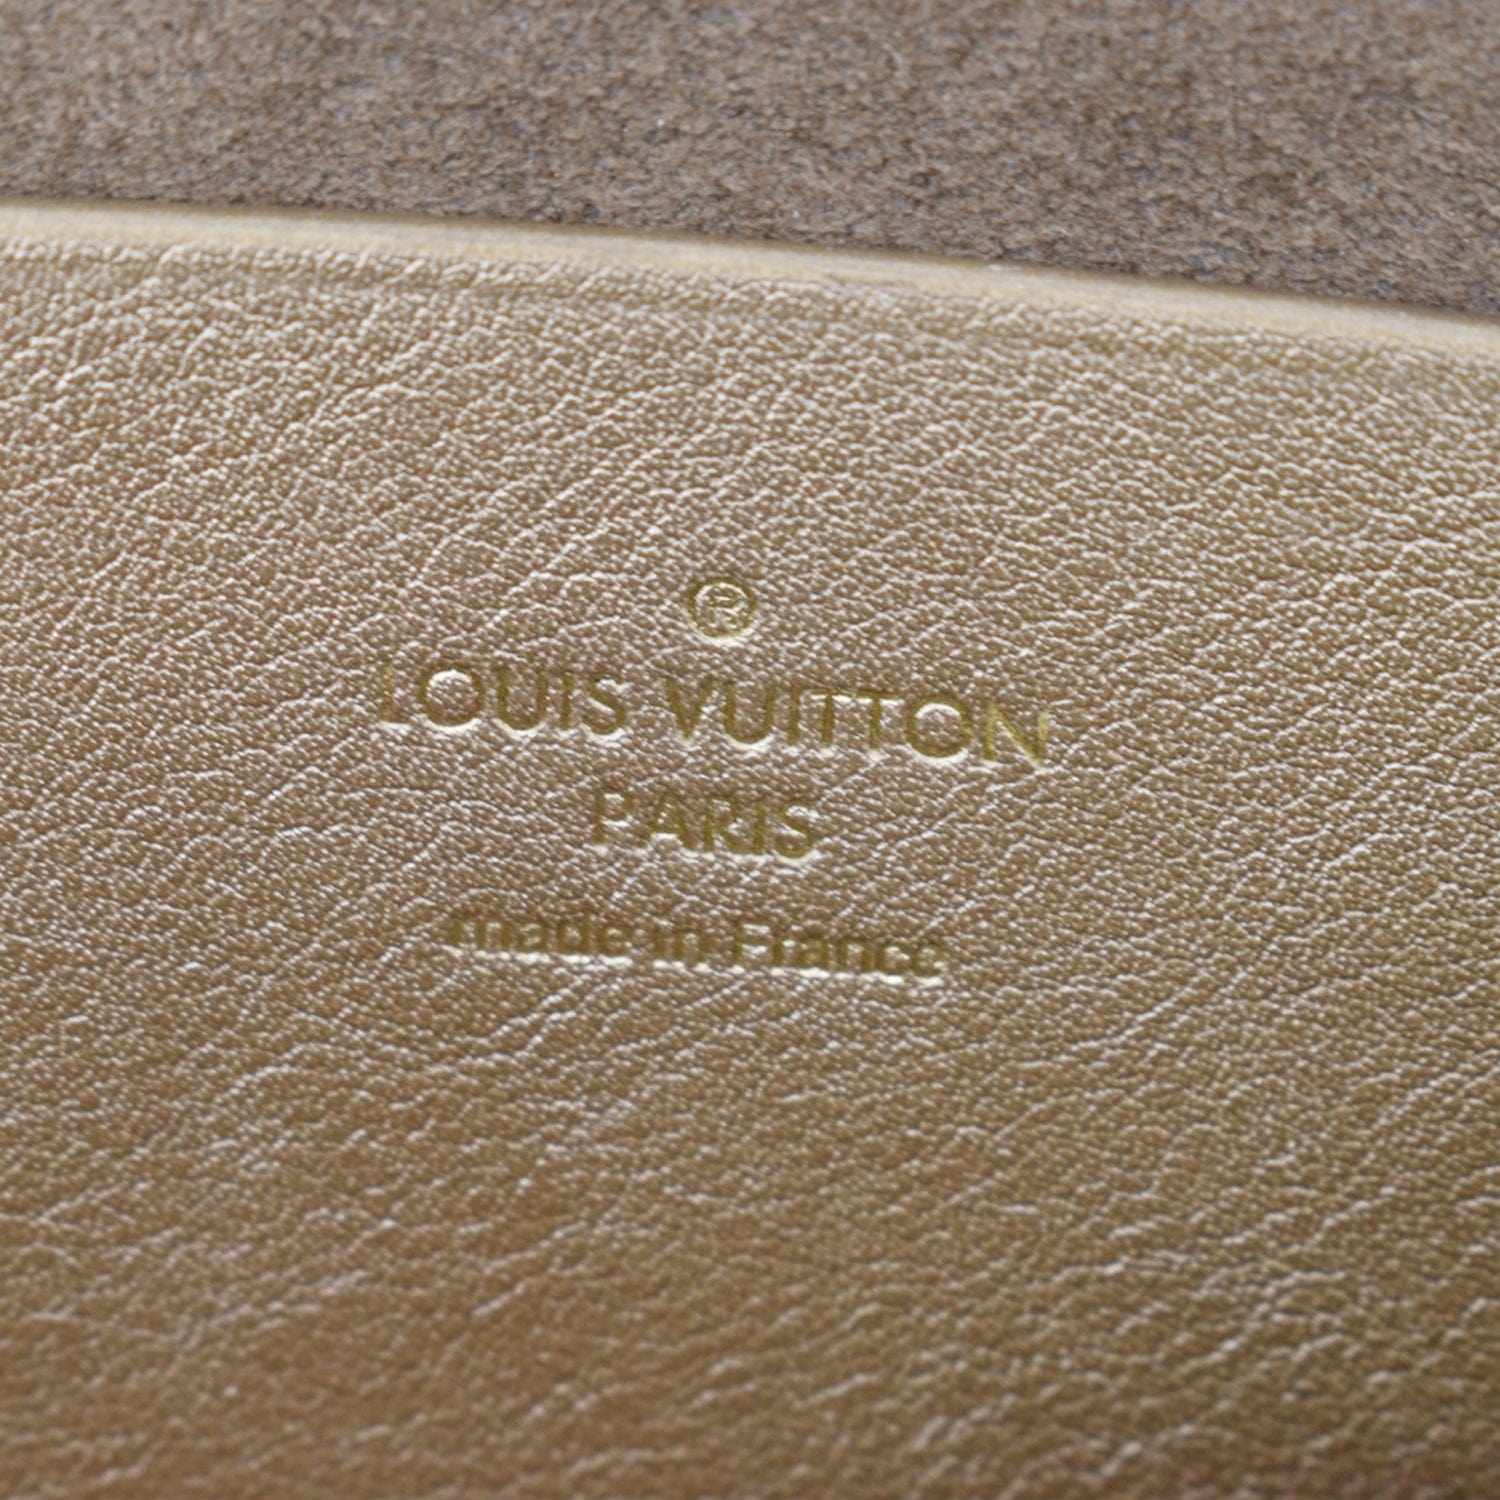 Louis Vuitton Love Note Bag Black - Selectionne PH